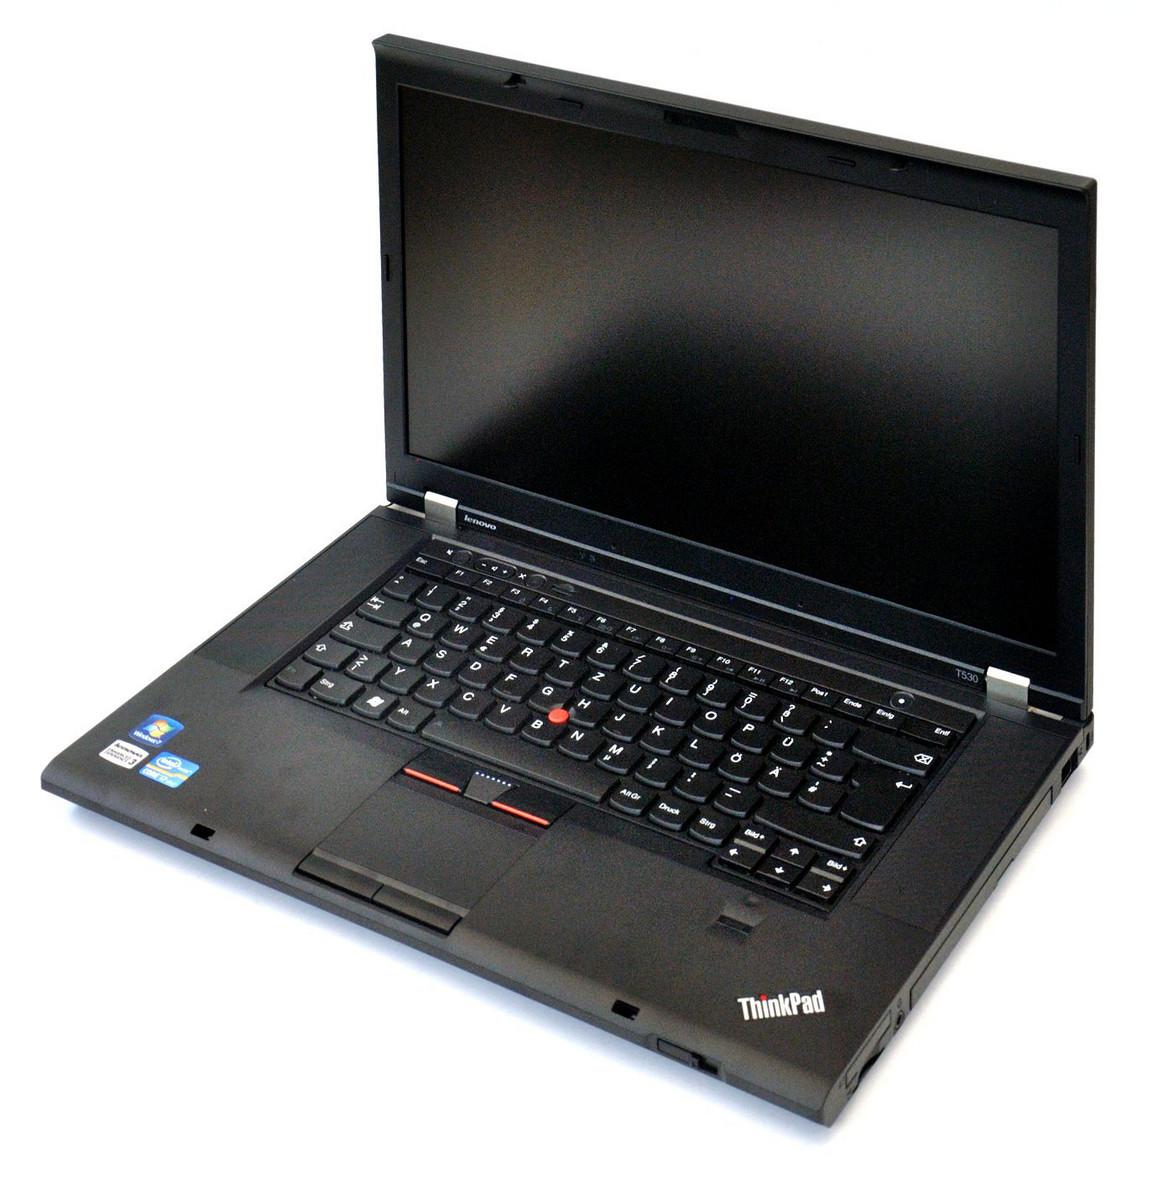 Lenovo ThinkPad T530 Core I7 2.90 GHz 8GB RAM 320GB HDD WIN 10,3RD 